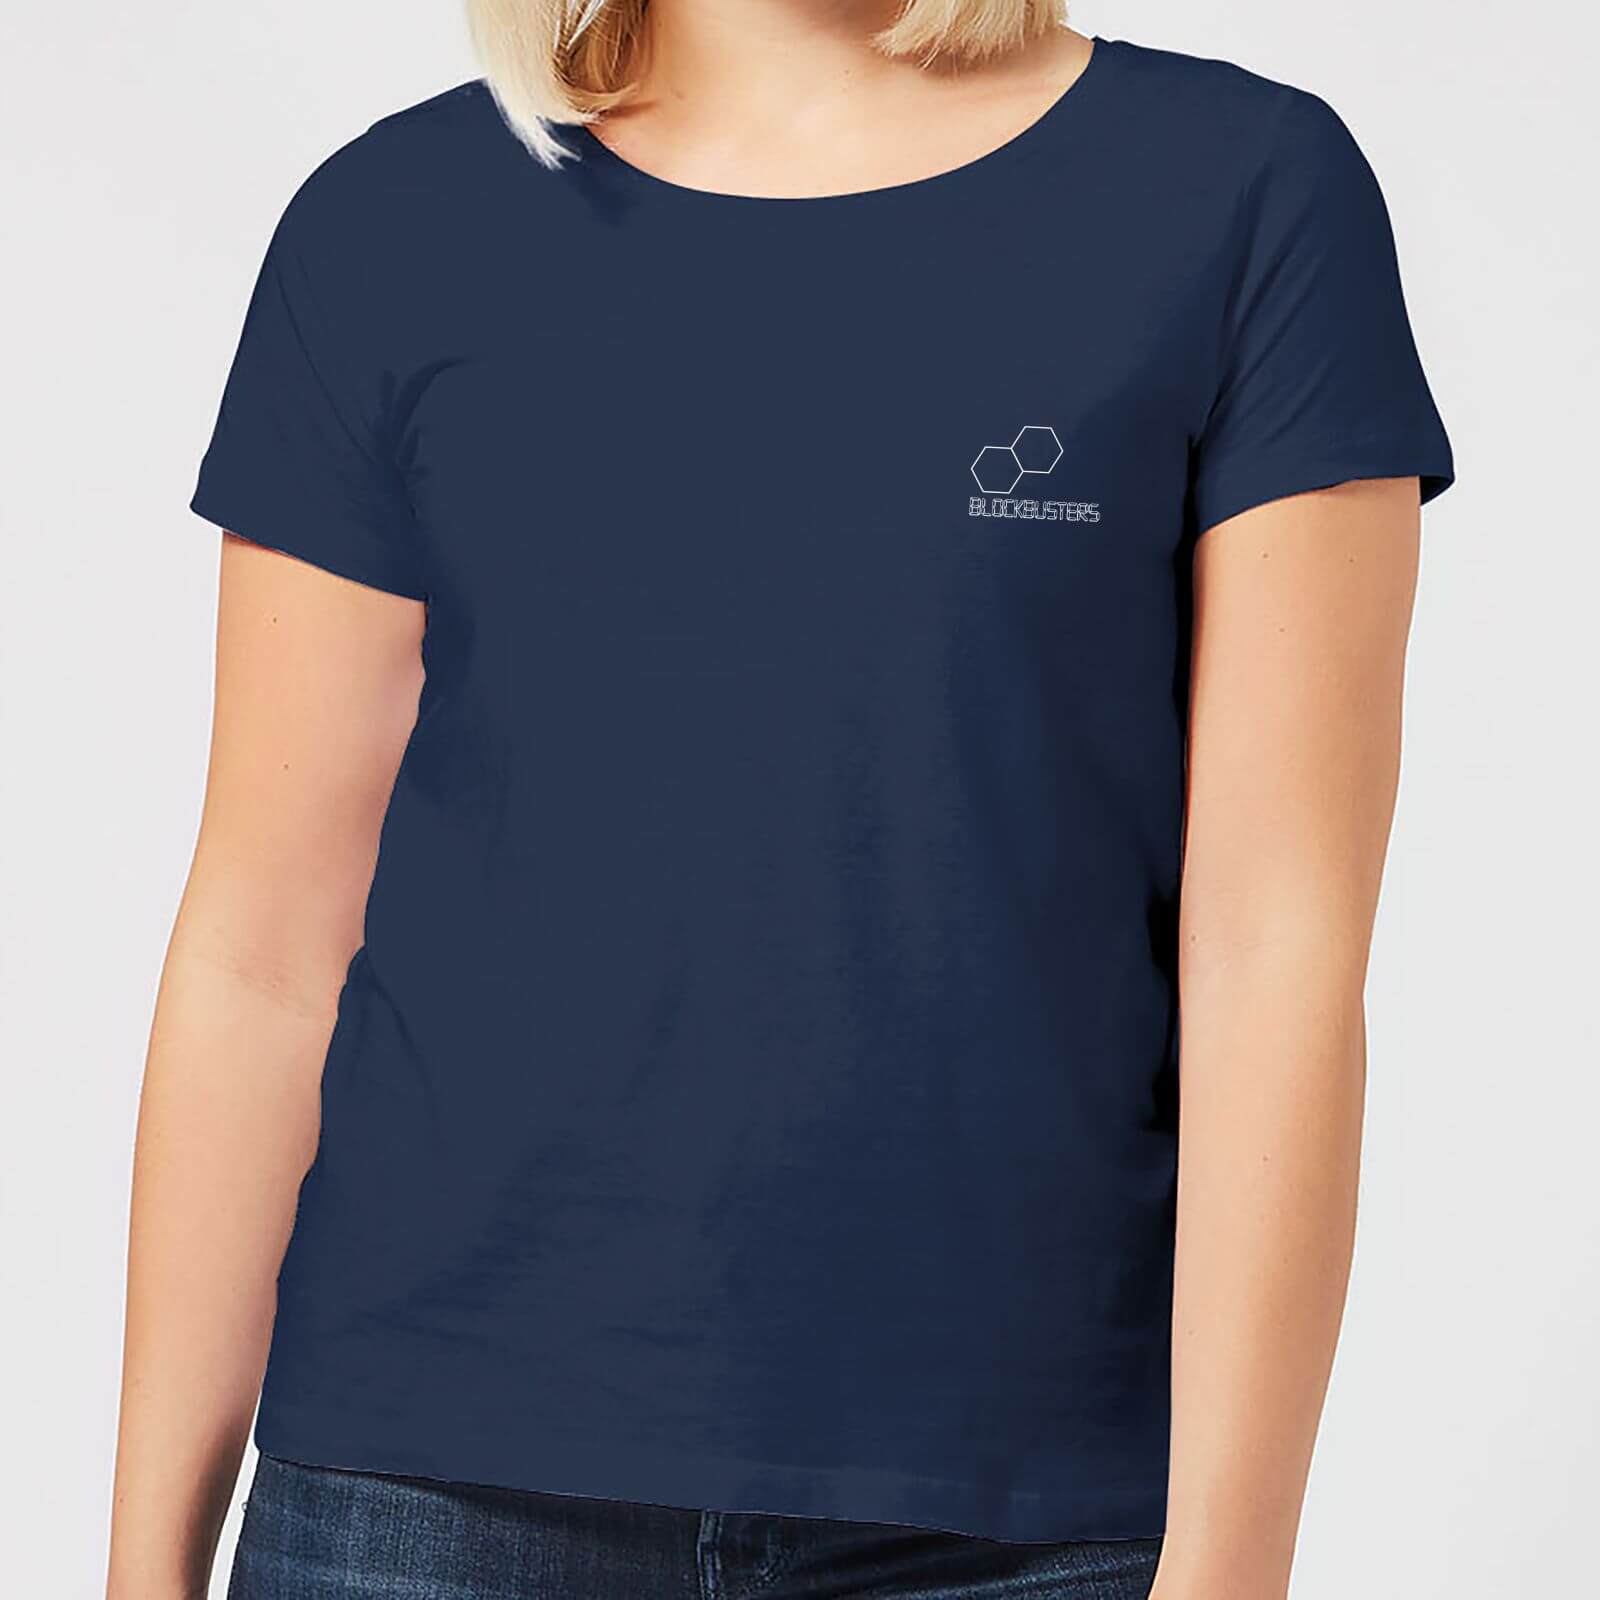 Blockbusters Pocket Print Women's T-Shirt - Navy - S - Navy